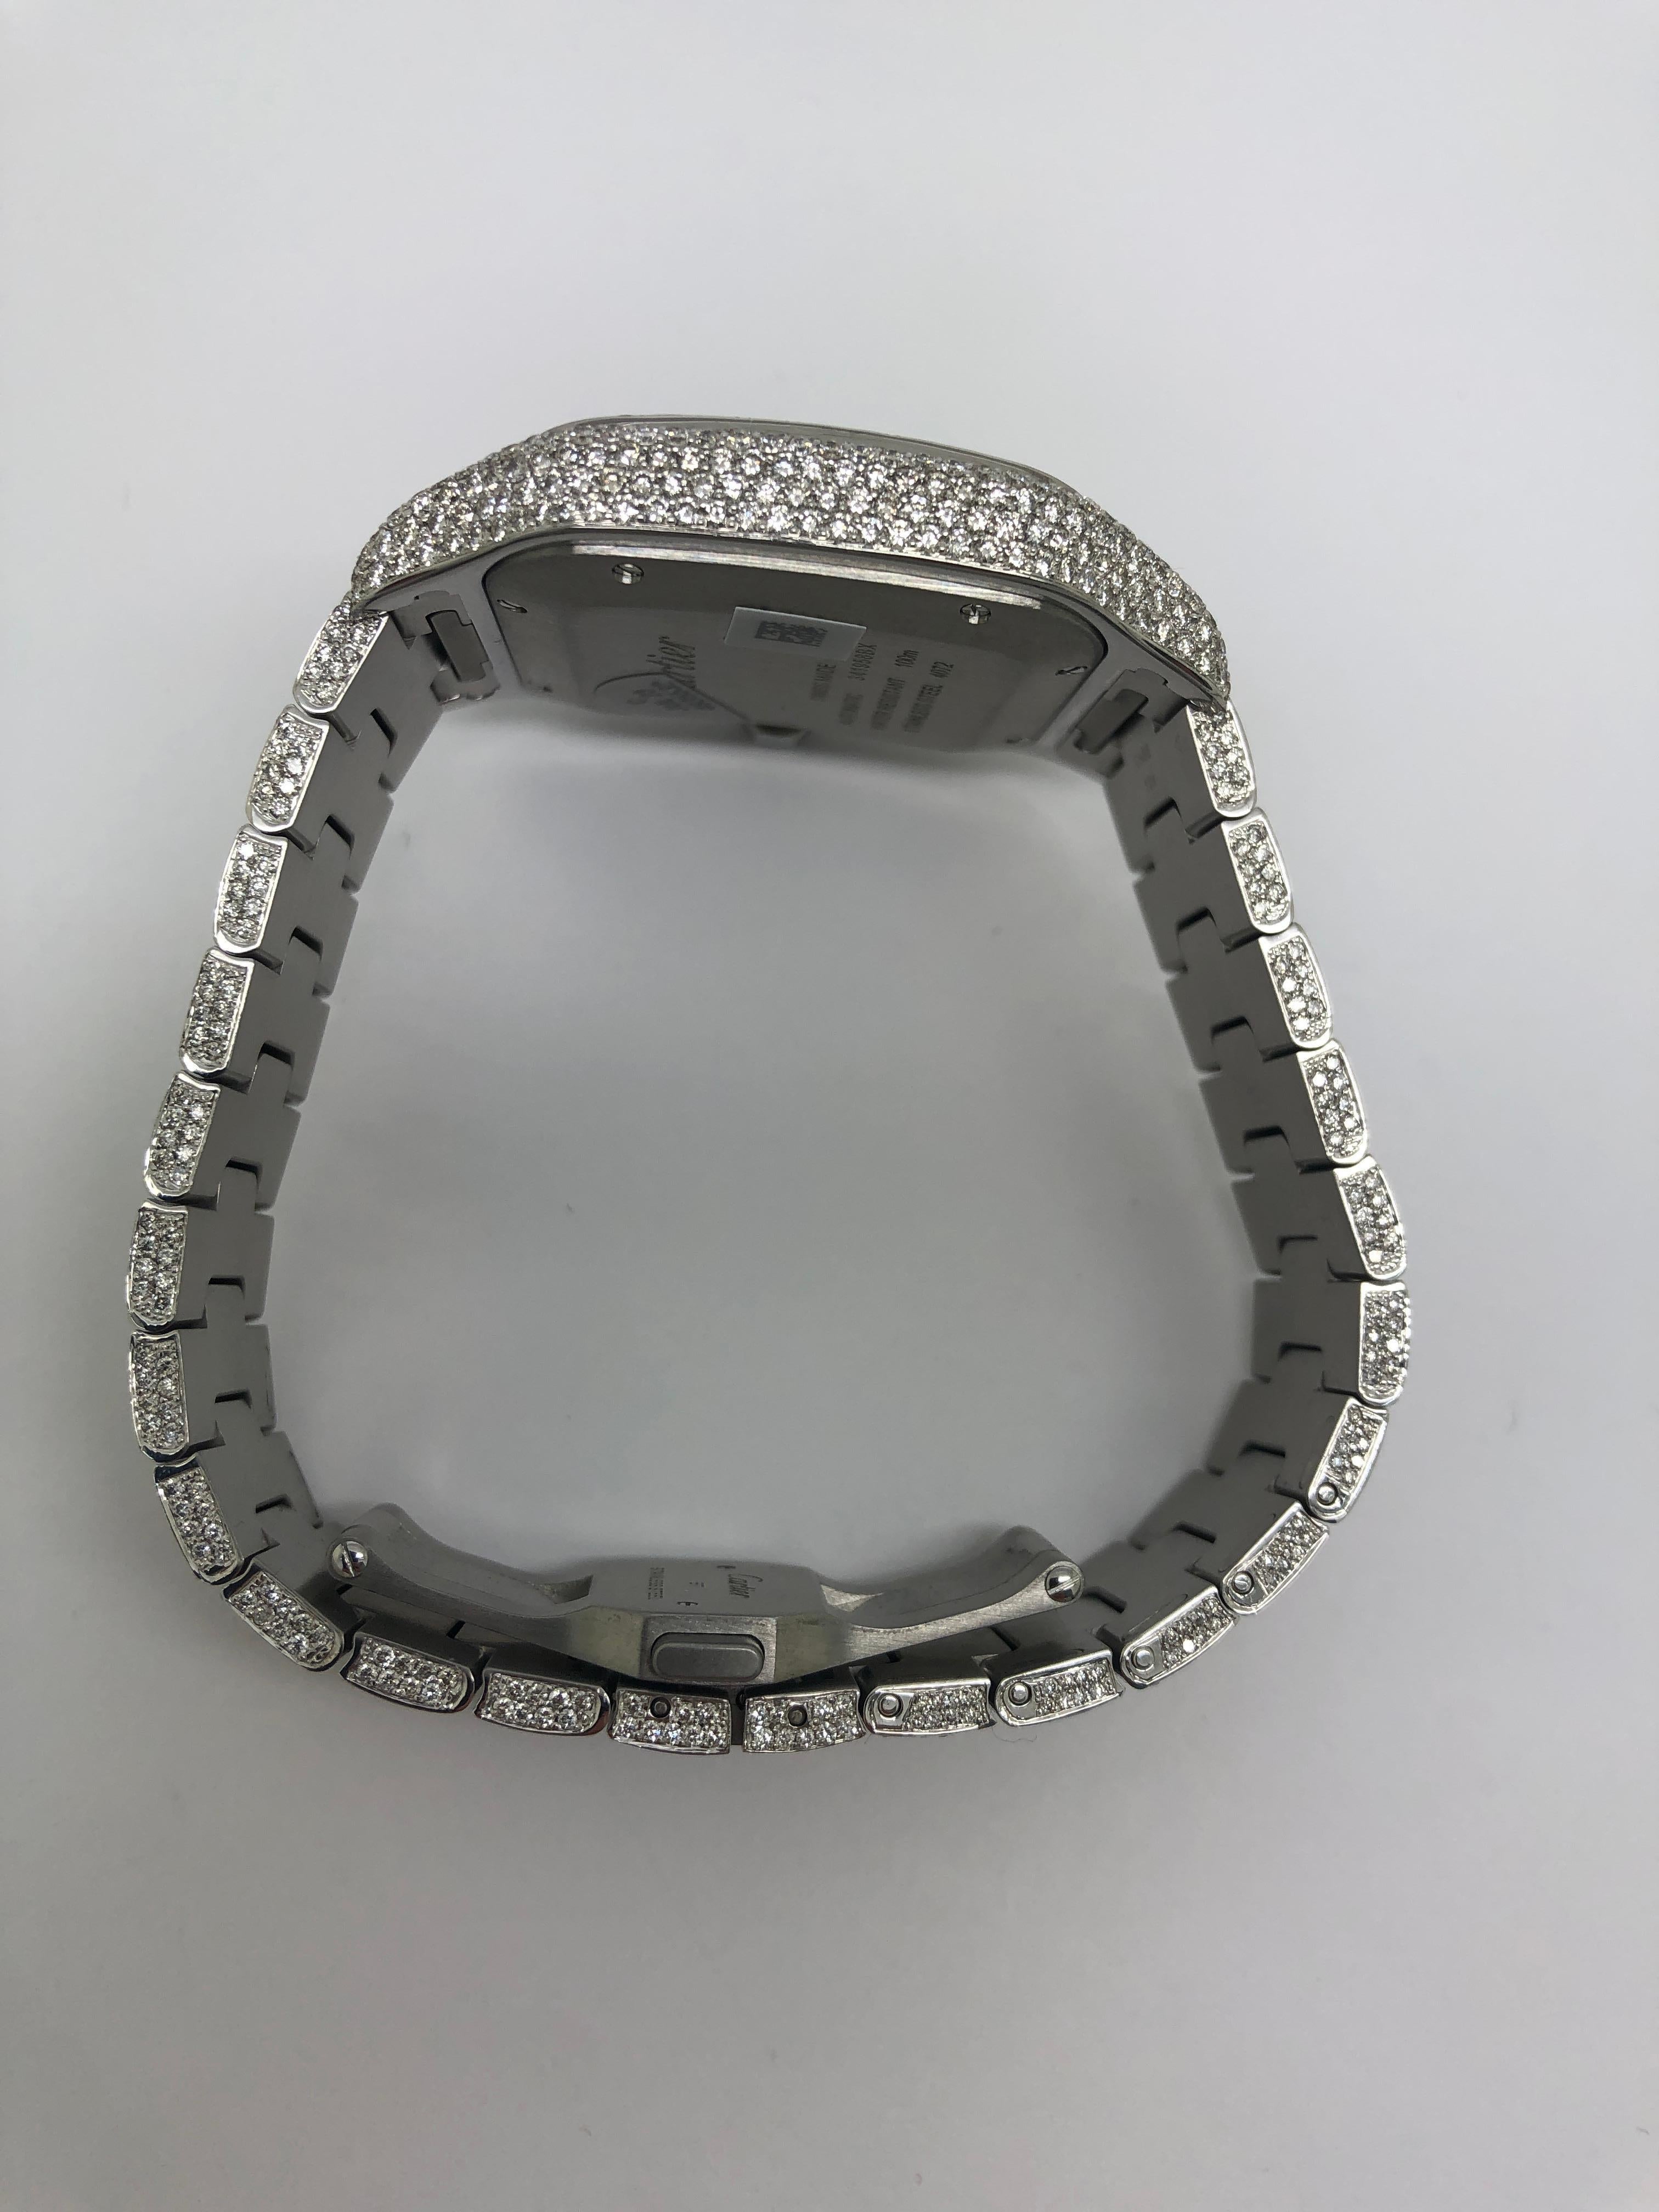 Cartier Santos Iced Out VVS Emerald Cut Diamond Roman Numeral Watch For Sale 1